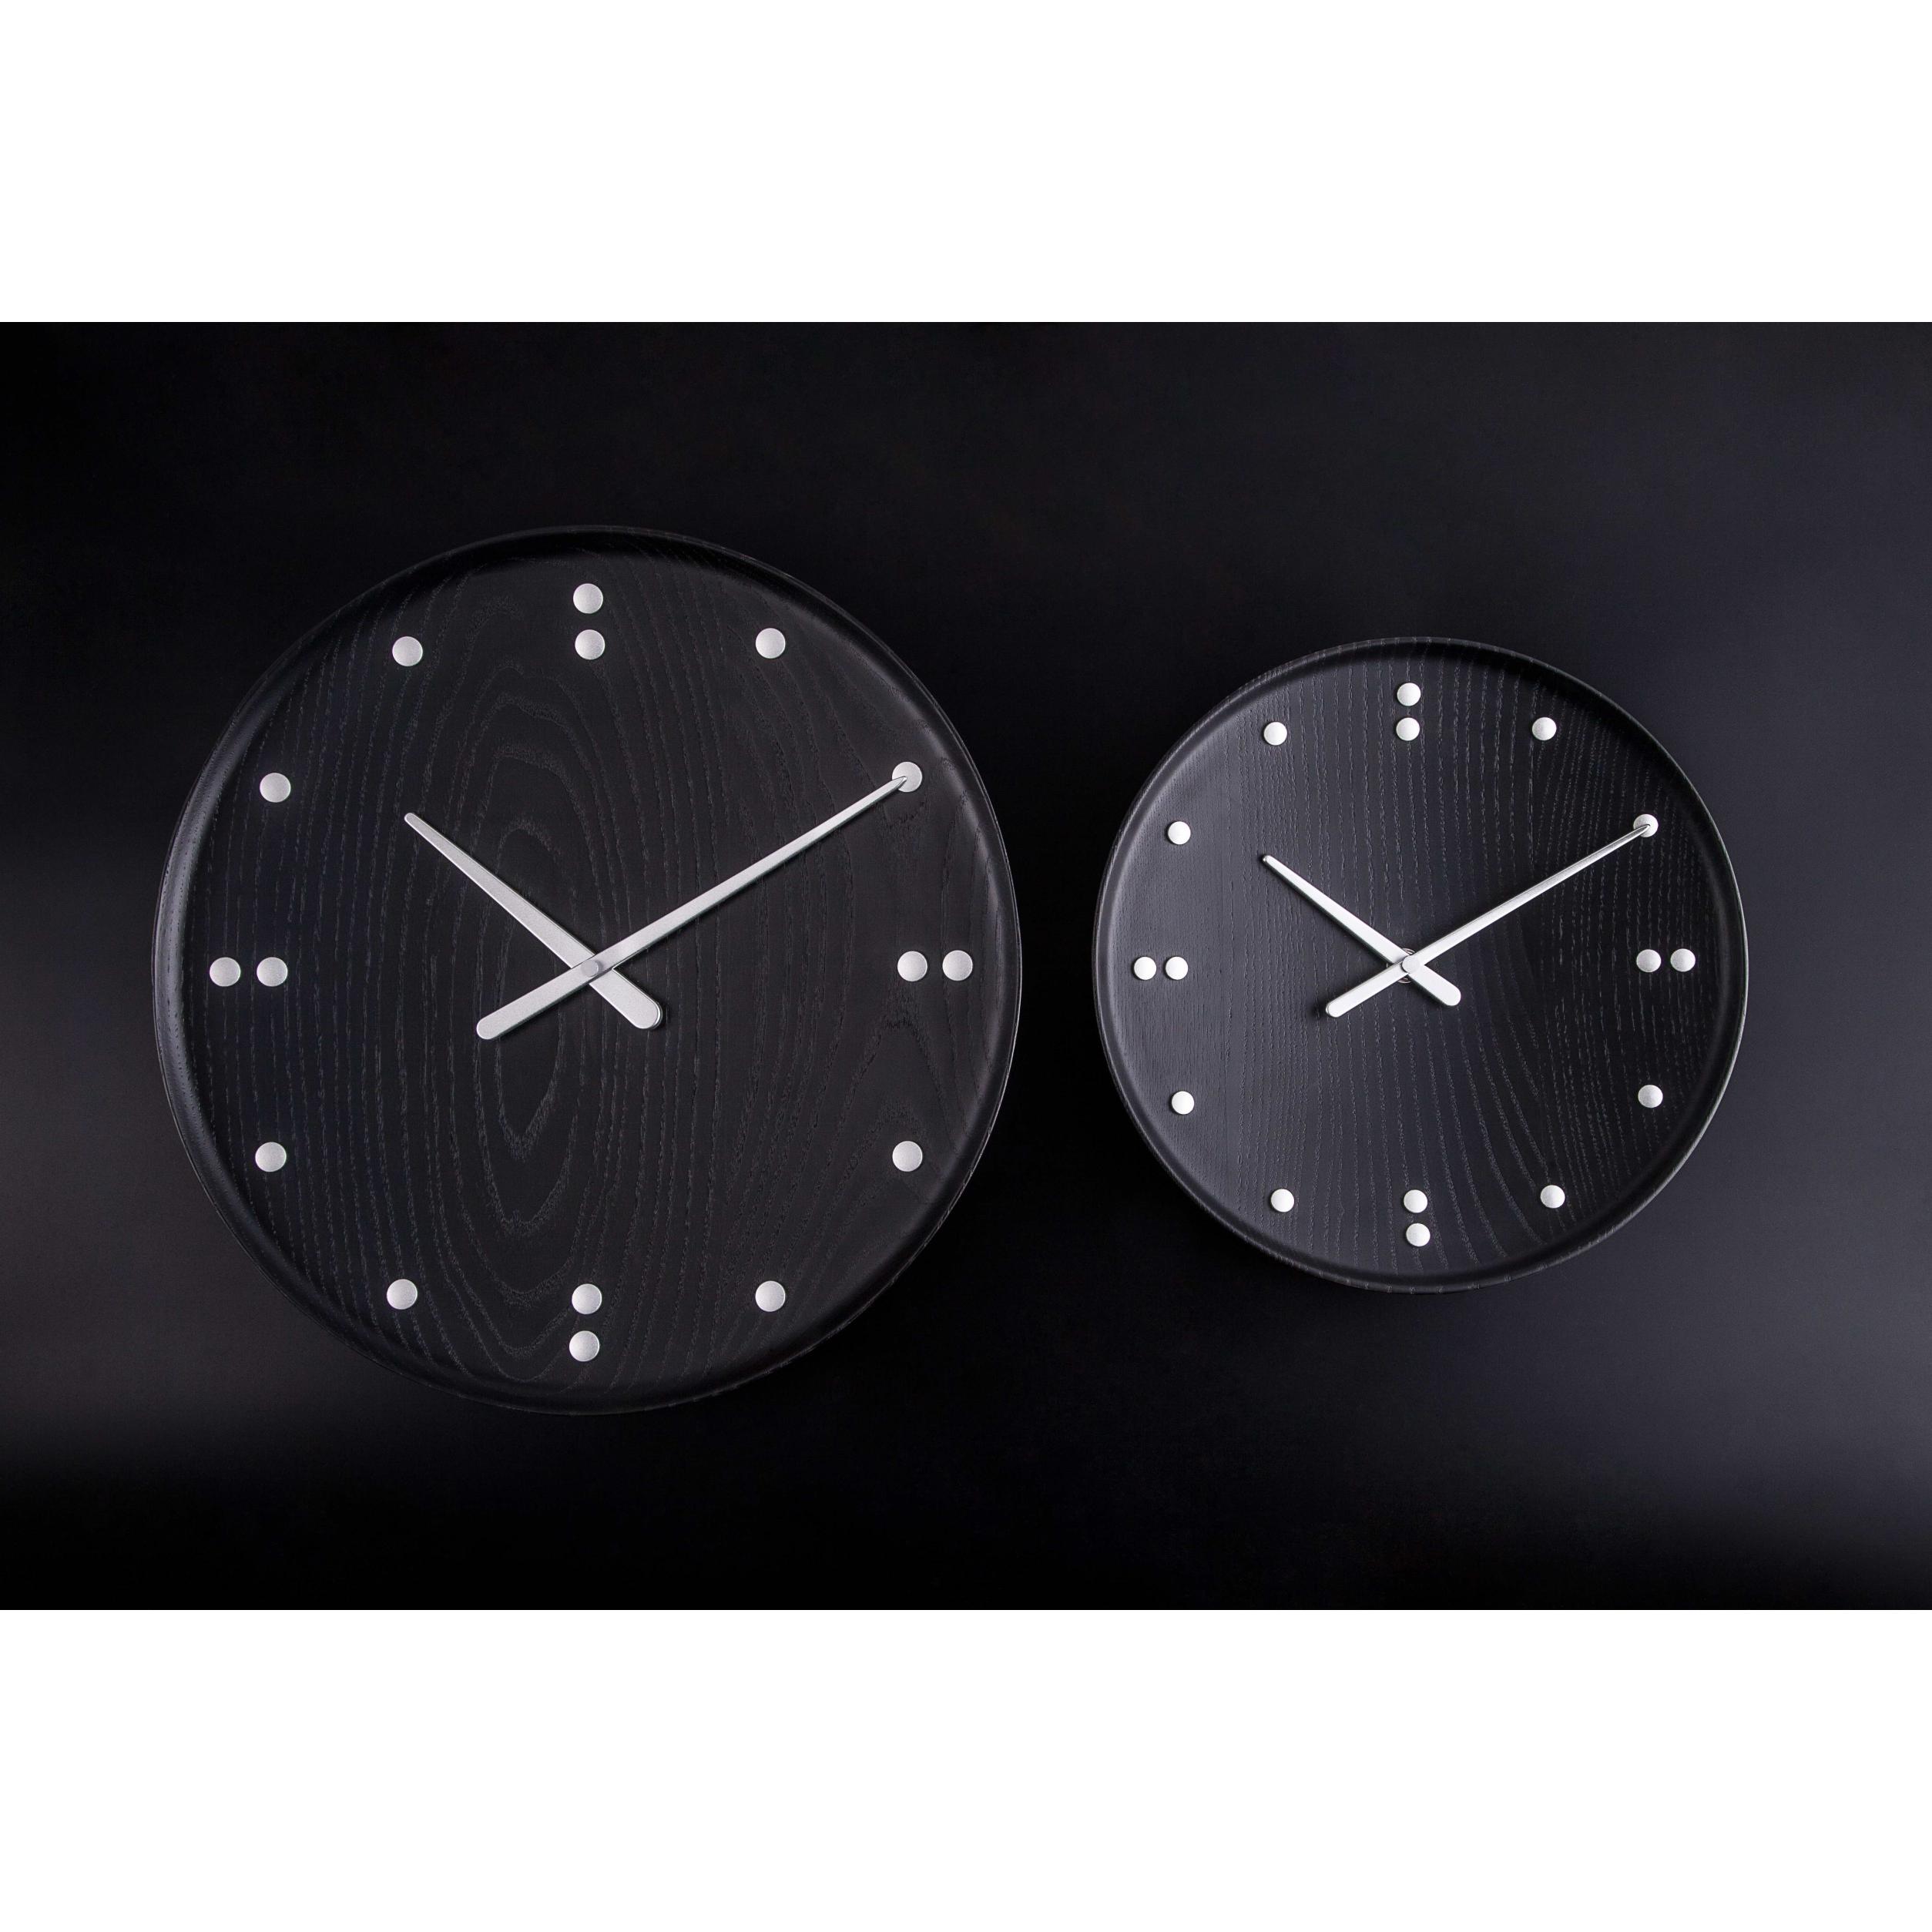 Architectmade Finn Juhl Wall Clock Black, Ø35 cm